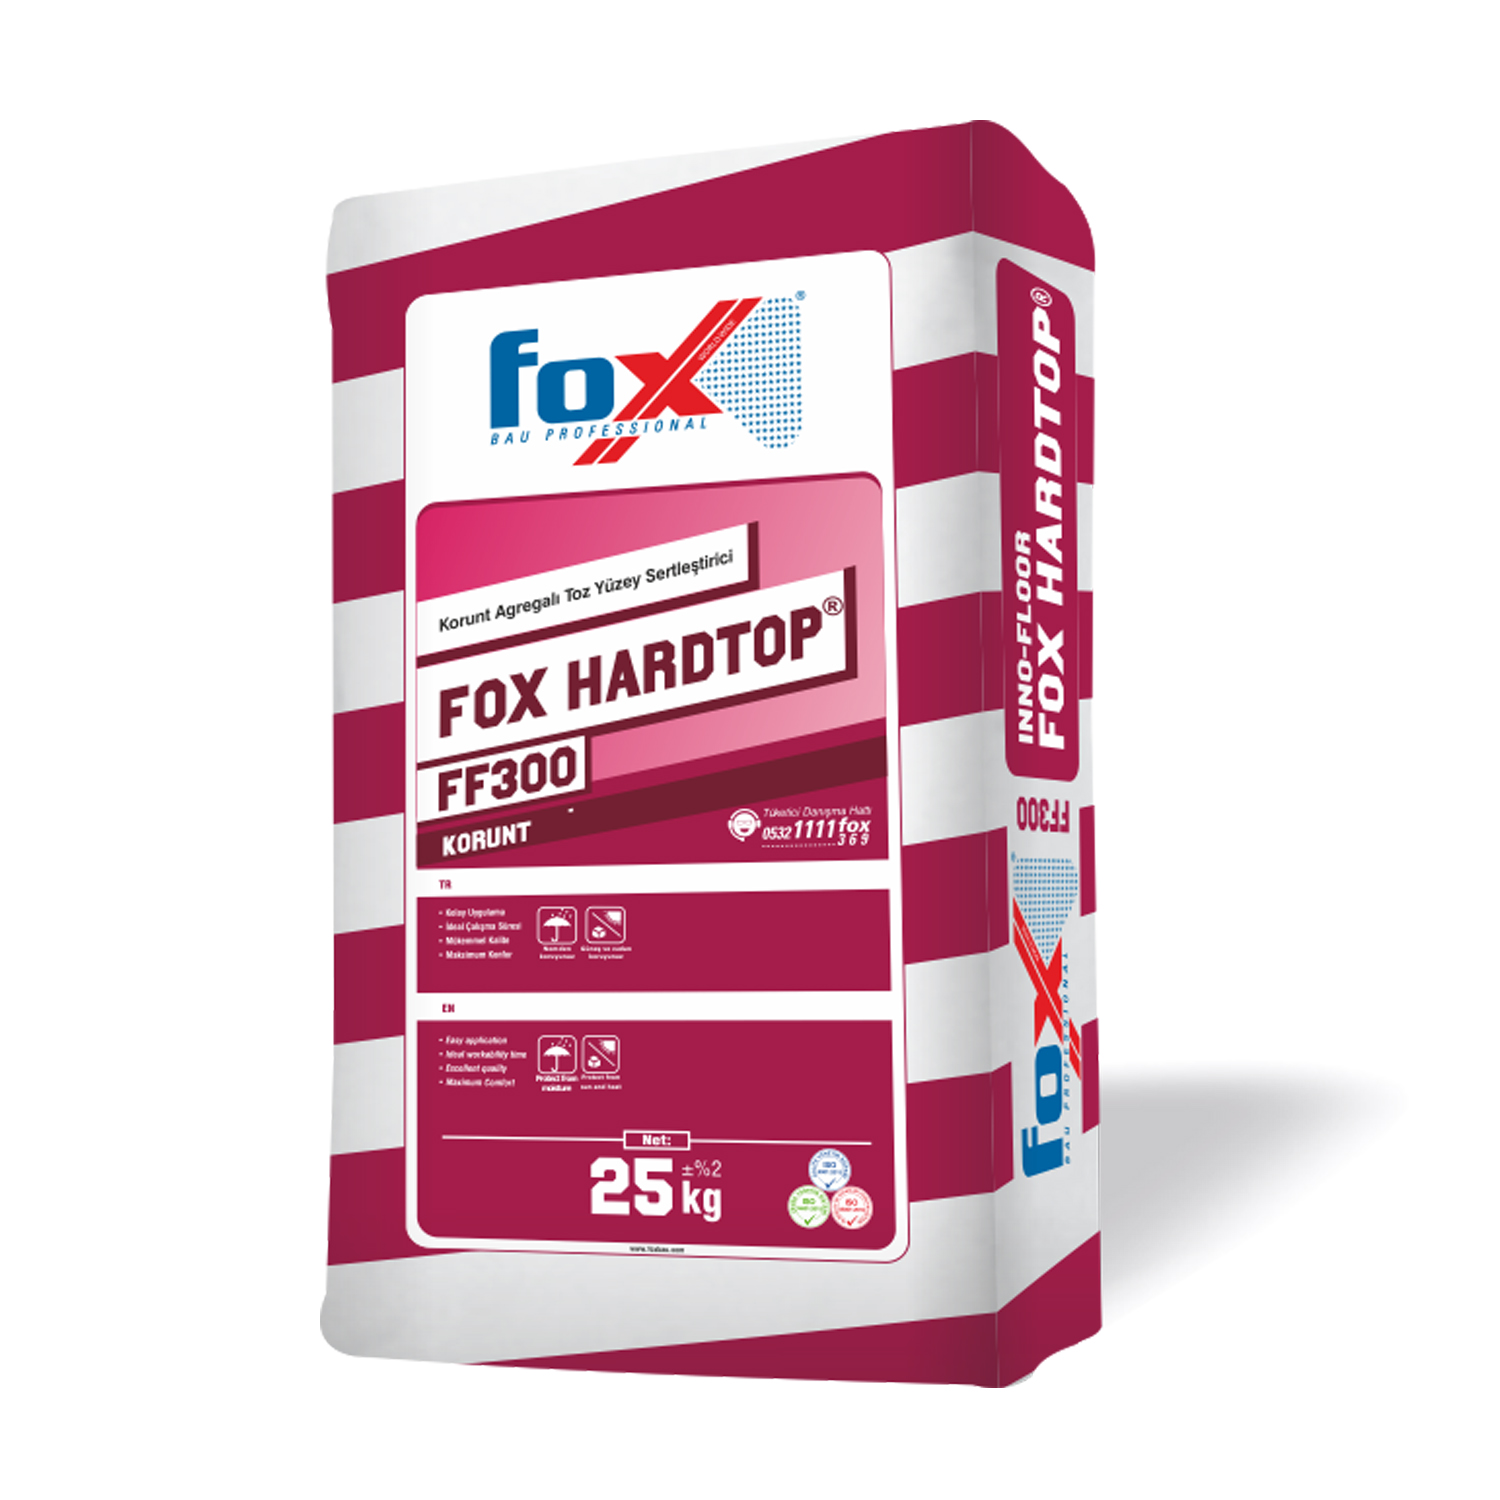 FOX HARDTOP® FF300 Bau – Professional Fox KORUNT